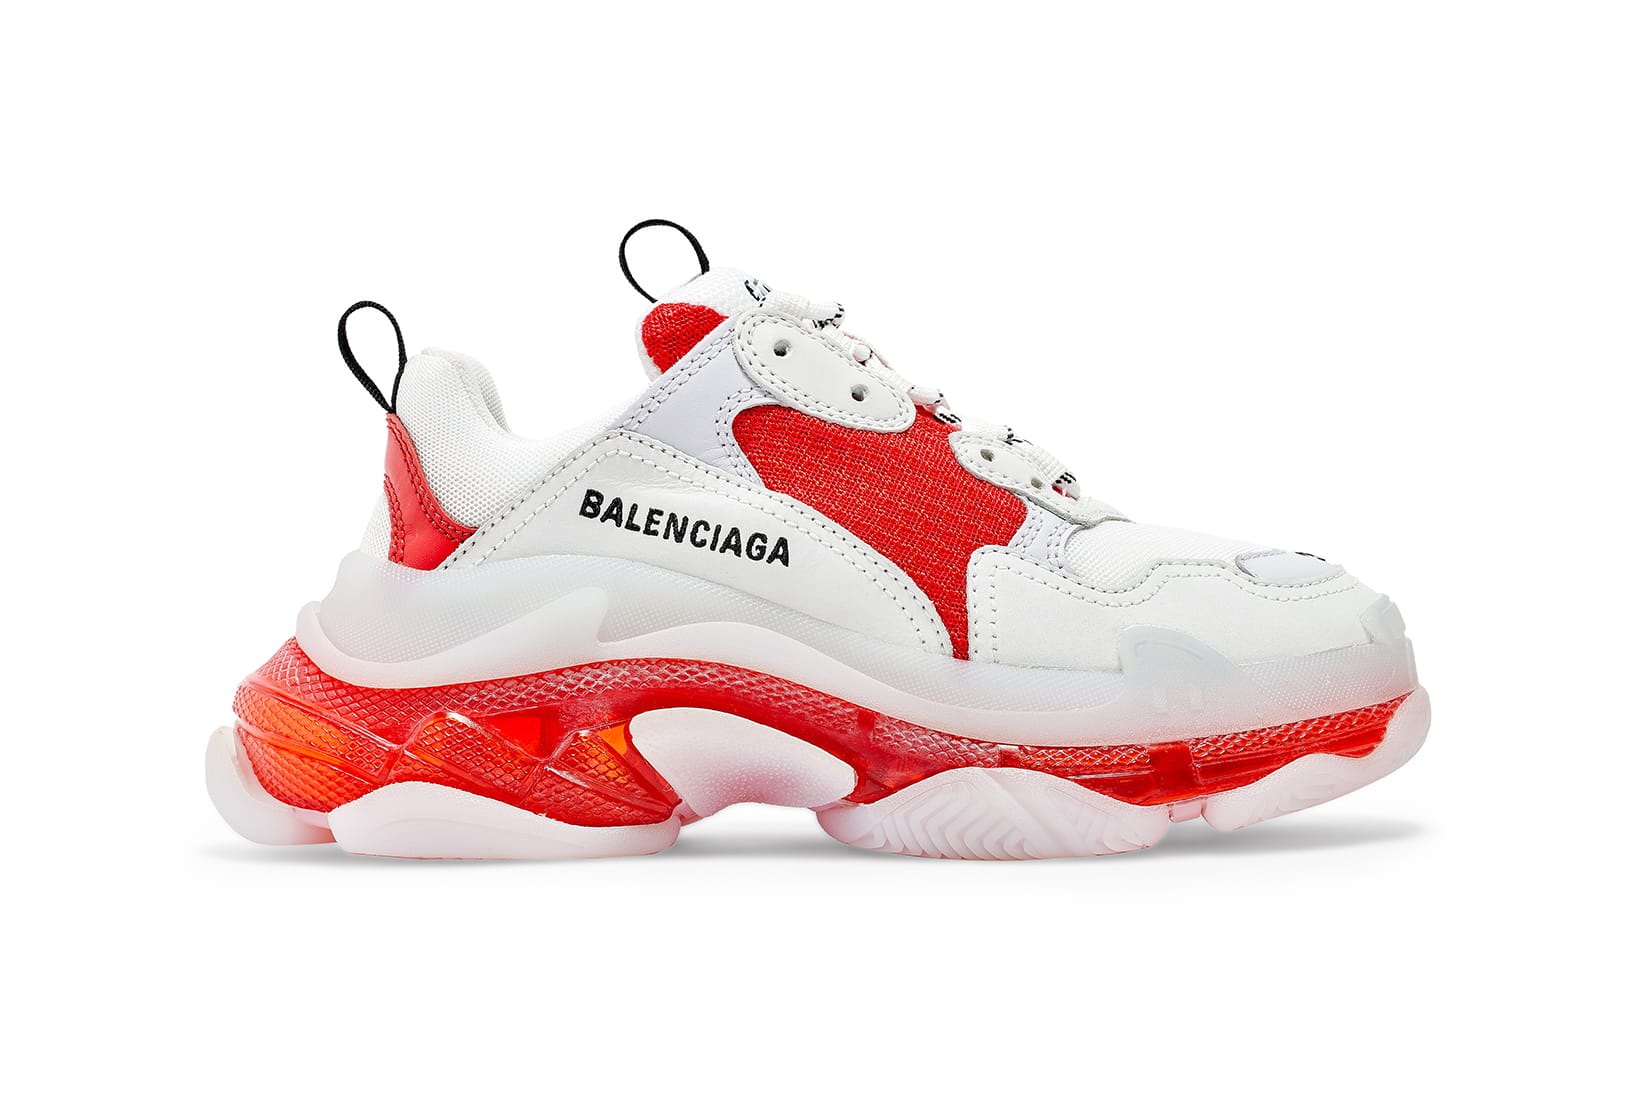 BALENCiAGA Valencia Gath ripple S 2 0 sneakers TRiPLE S